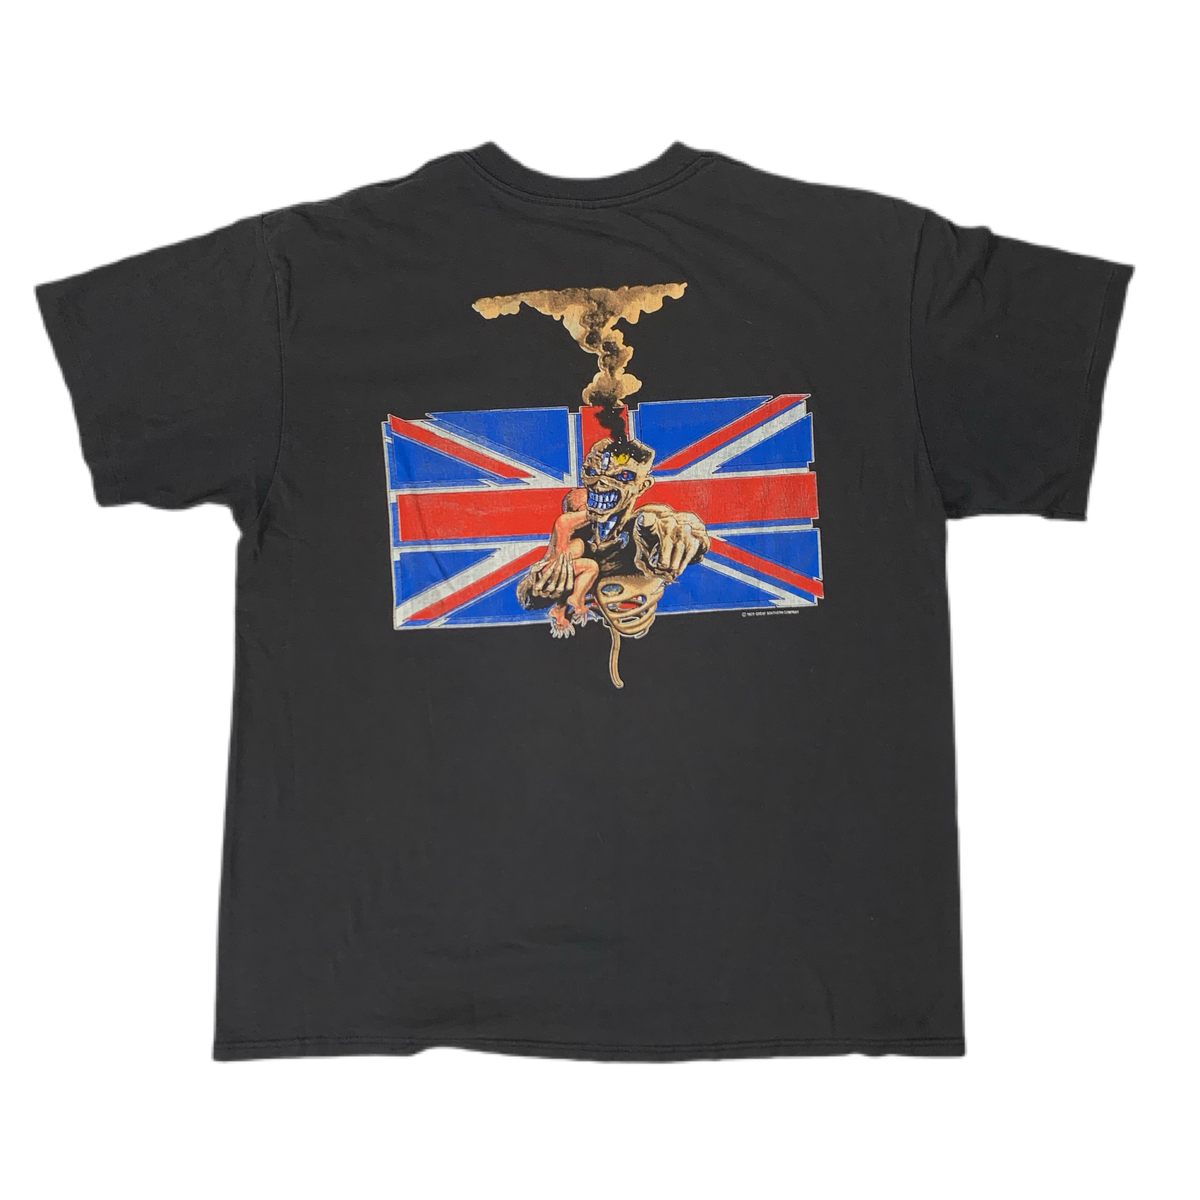 Vintage Iron Maiden “Seventh Son” T-Shirt